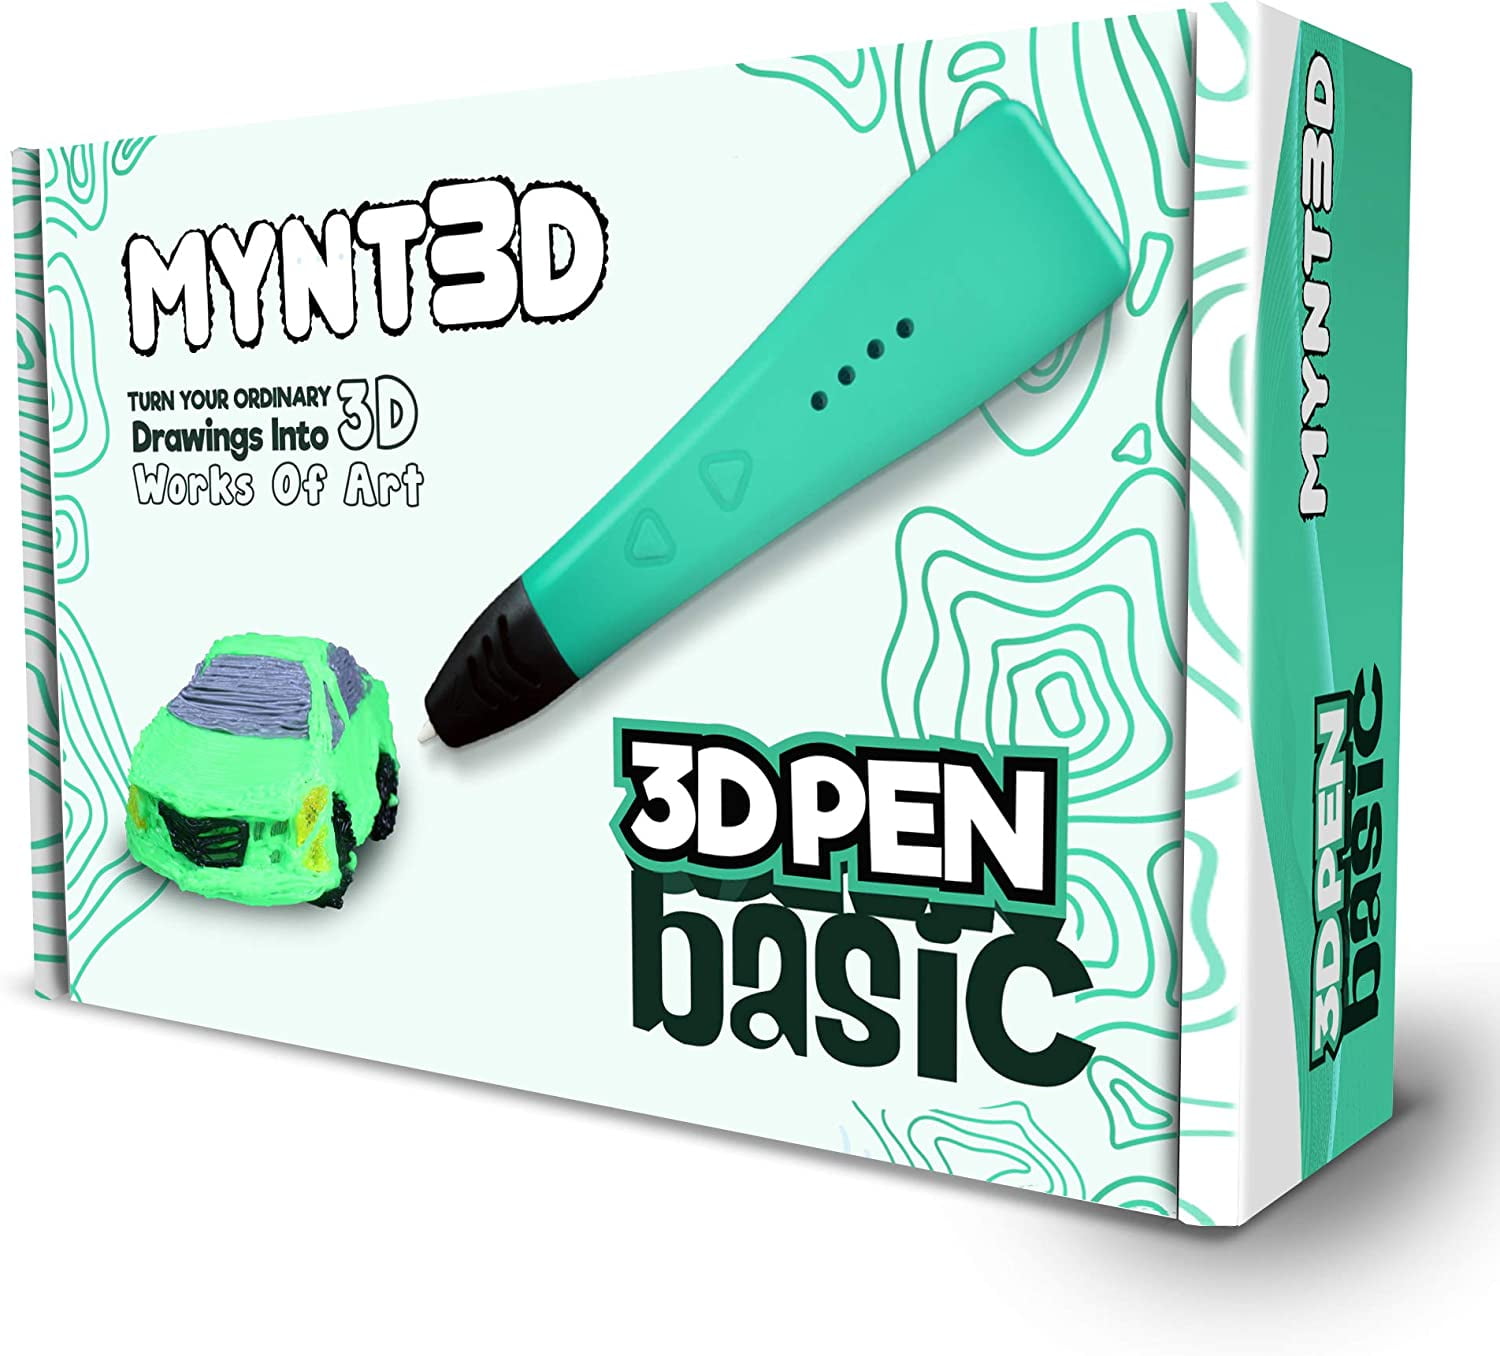 Mynt3D Pro Pen Case